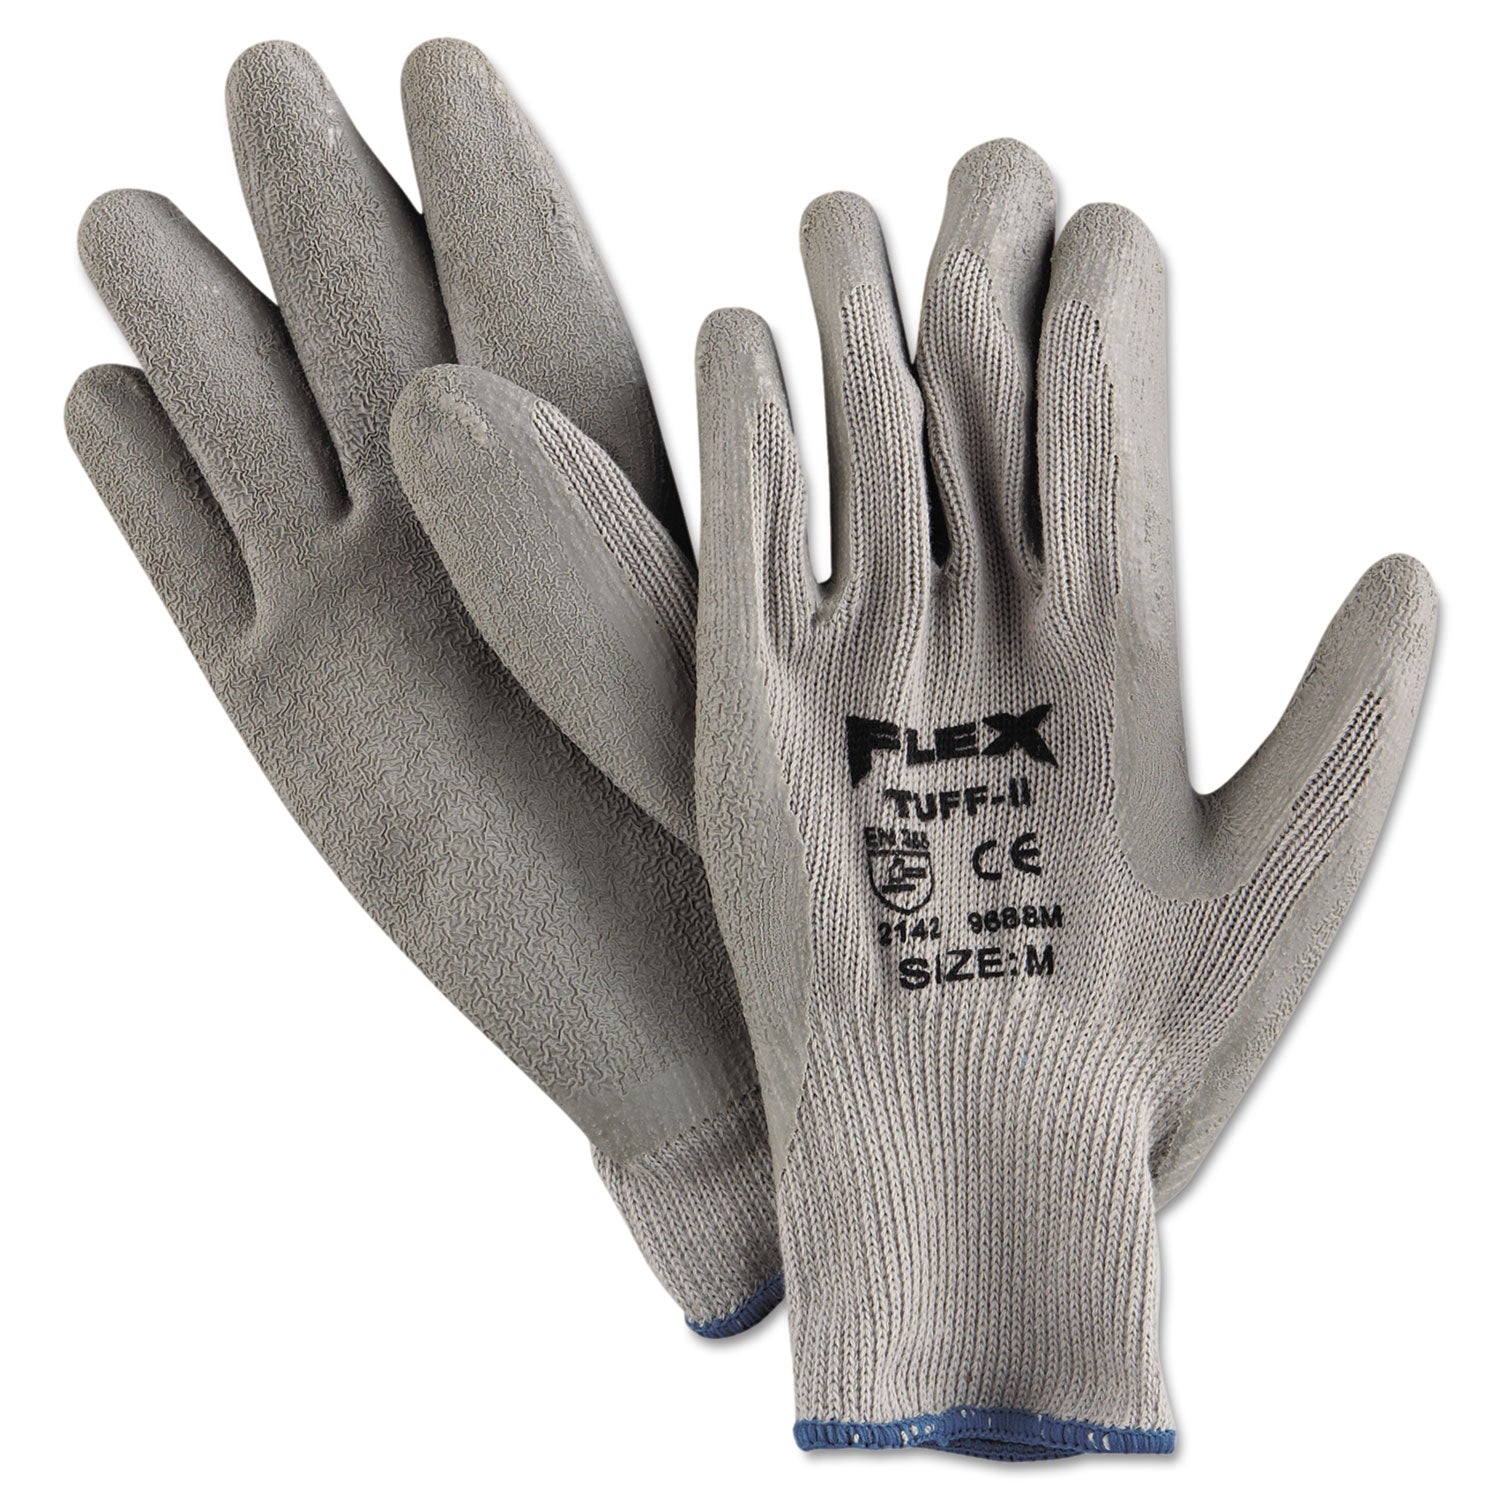 flextuff-latex-dipped-gloves-gray-medium-12-pairs_mpg9688m - 1